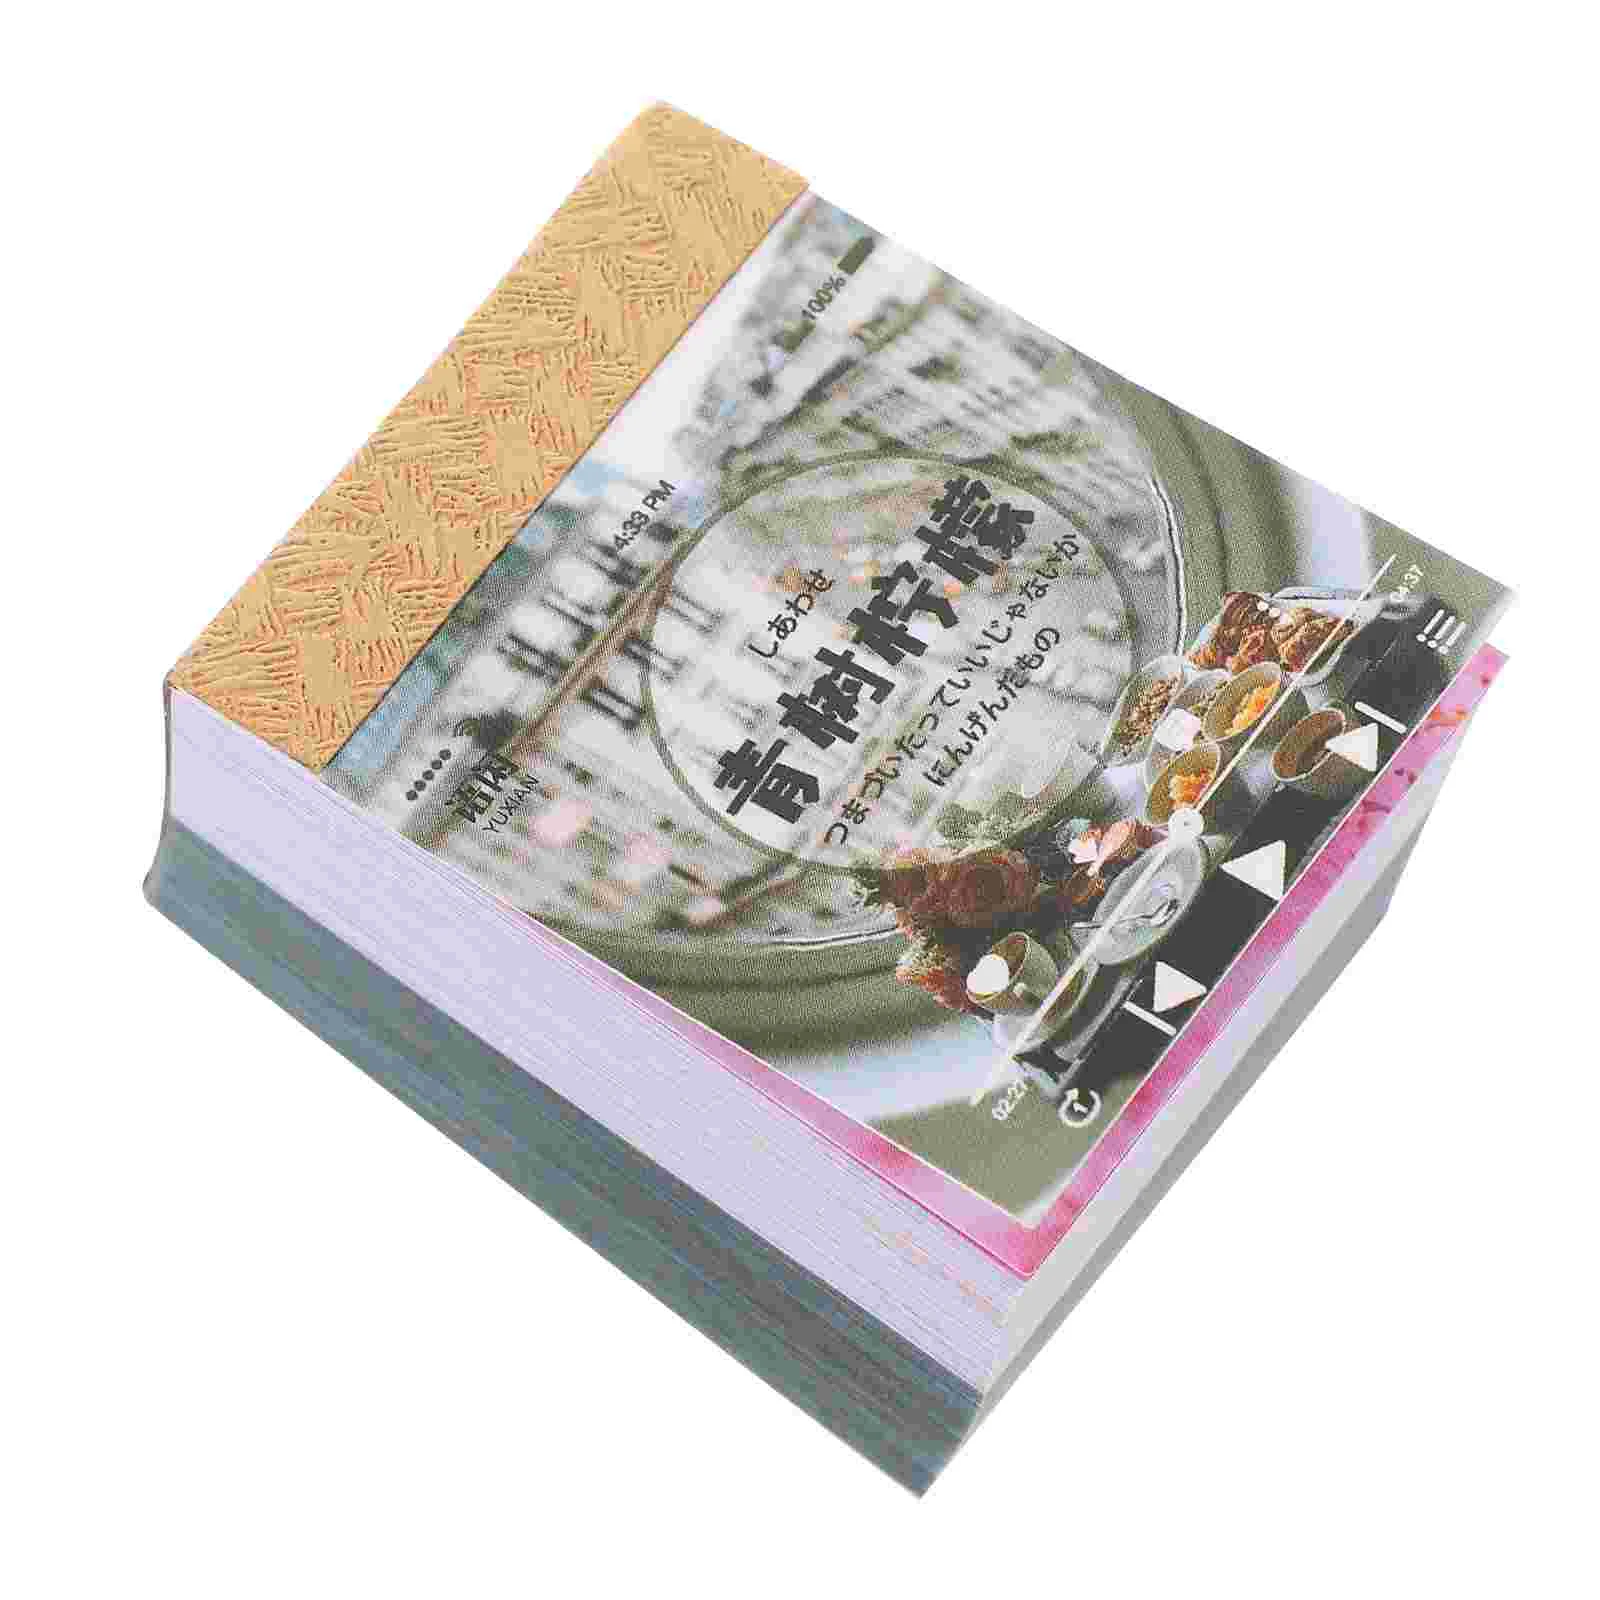 

Paper Scrapbook Scrapbooking Diy Vintage Journal Material Stickers Sticker Decorative Journaling Washi Diary Supplies Craft